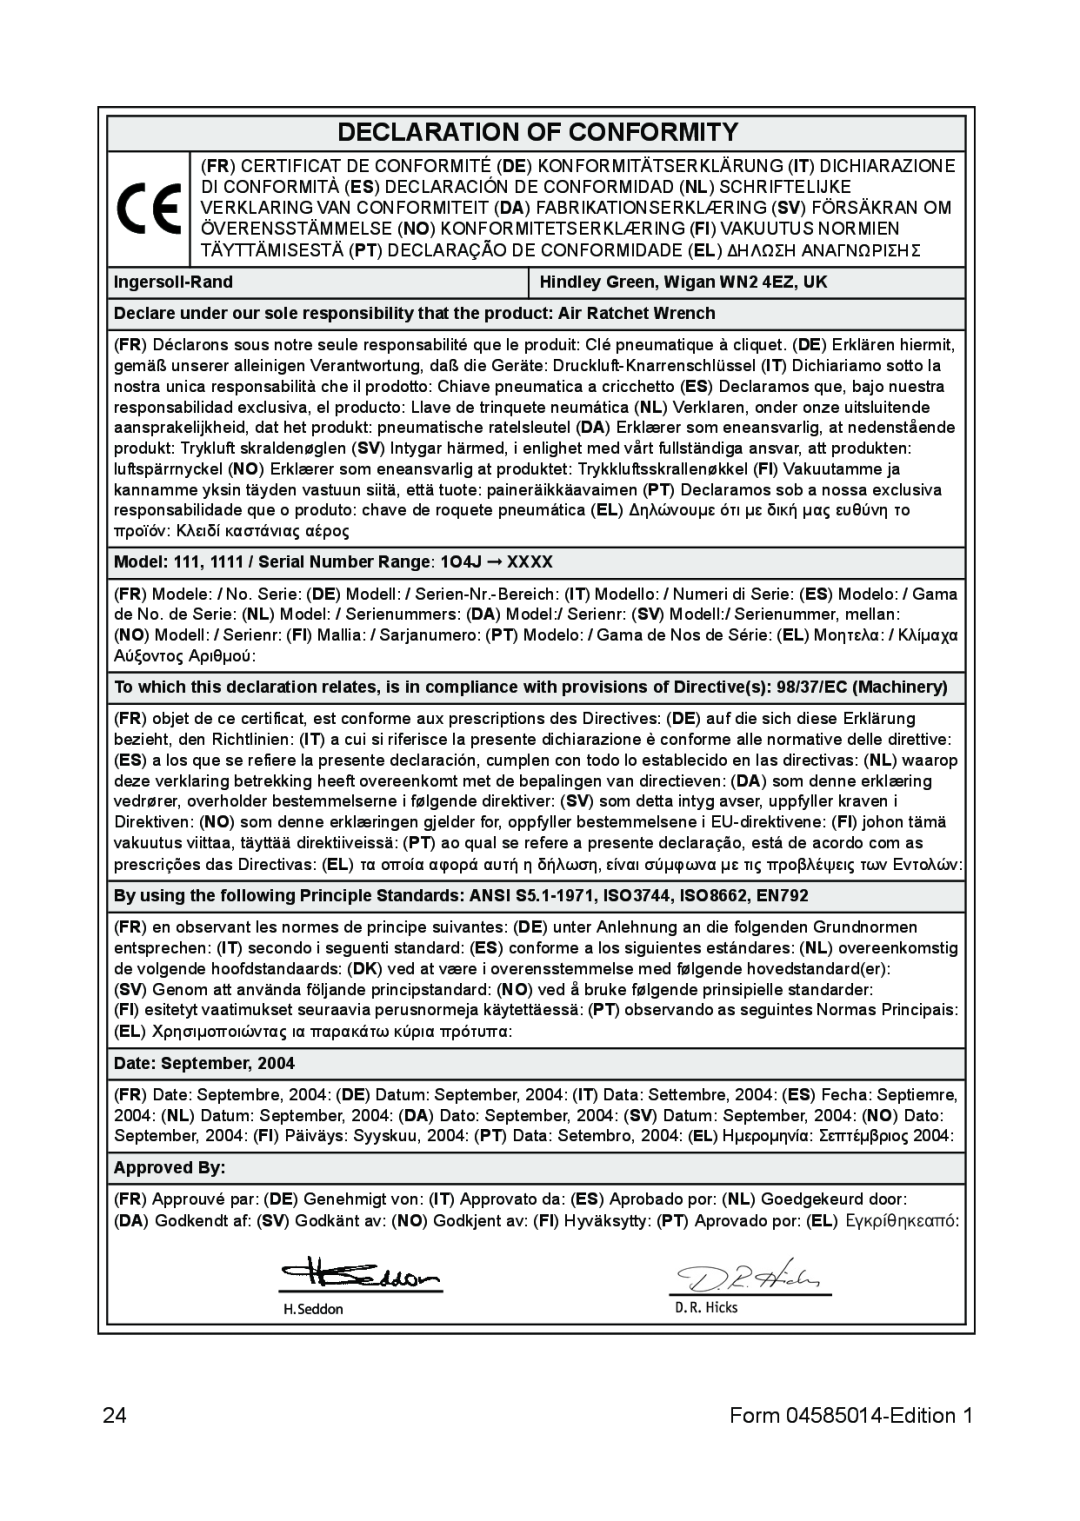 Ingersoll-Rand 1111 Declaration Of Conformity, Form 04585014-Edition, Ingersoll-Rand, Hindley Green, Wigan WN2 4EZ, UK 